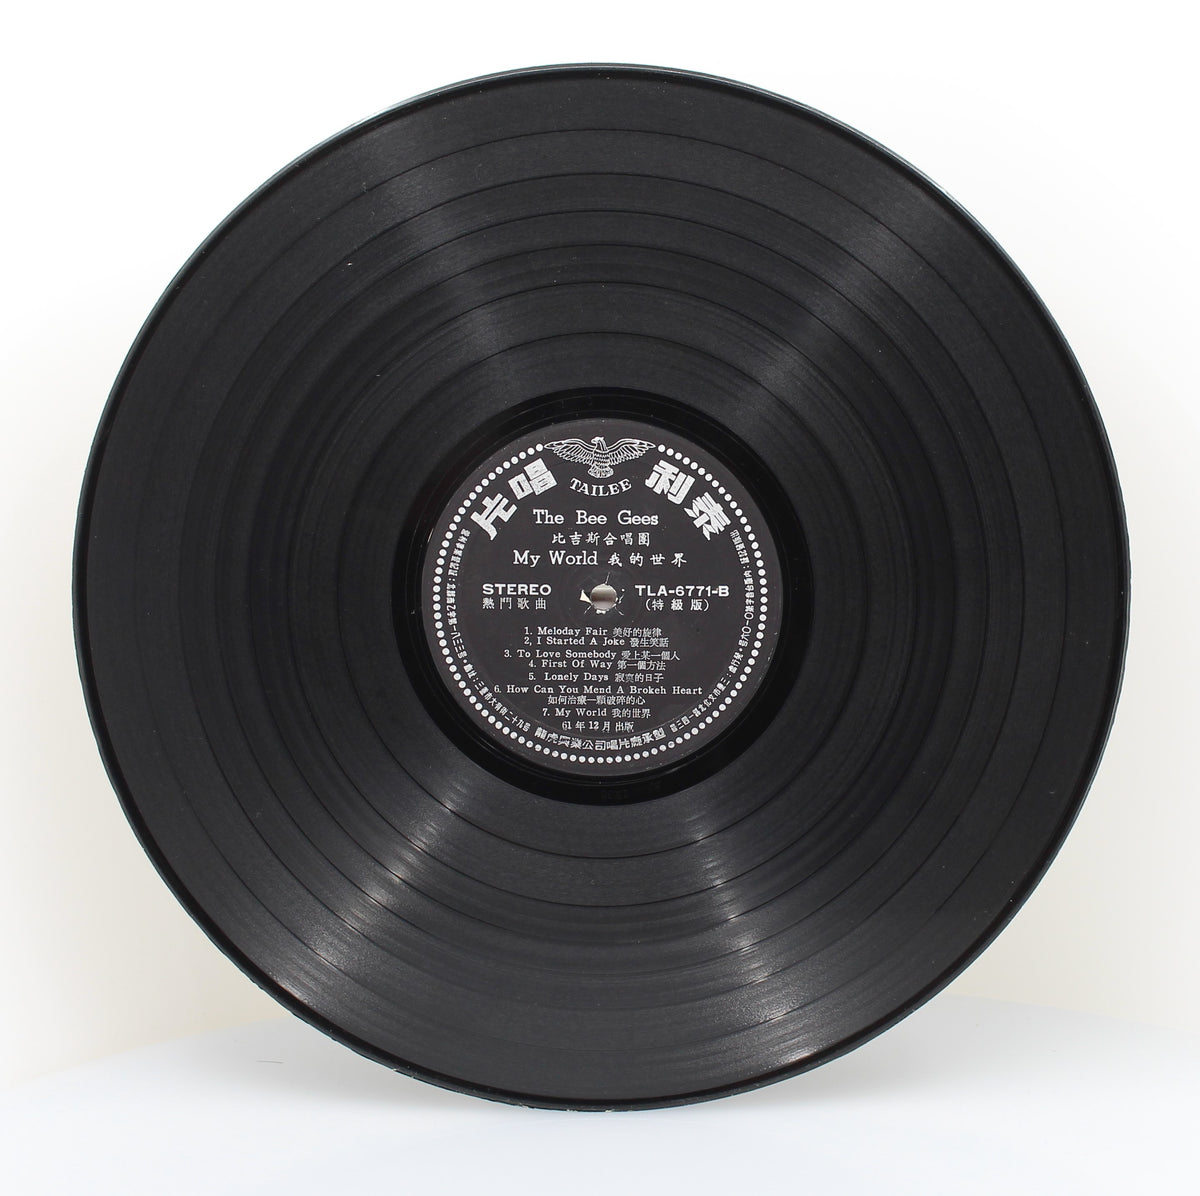 Bee Gees - My World, Vinyl, LP, Album, Unofficial Release, Taiwan